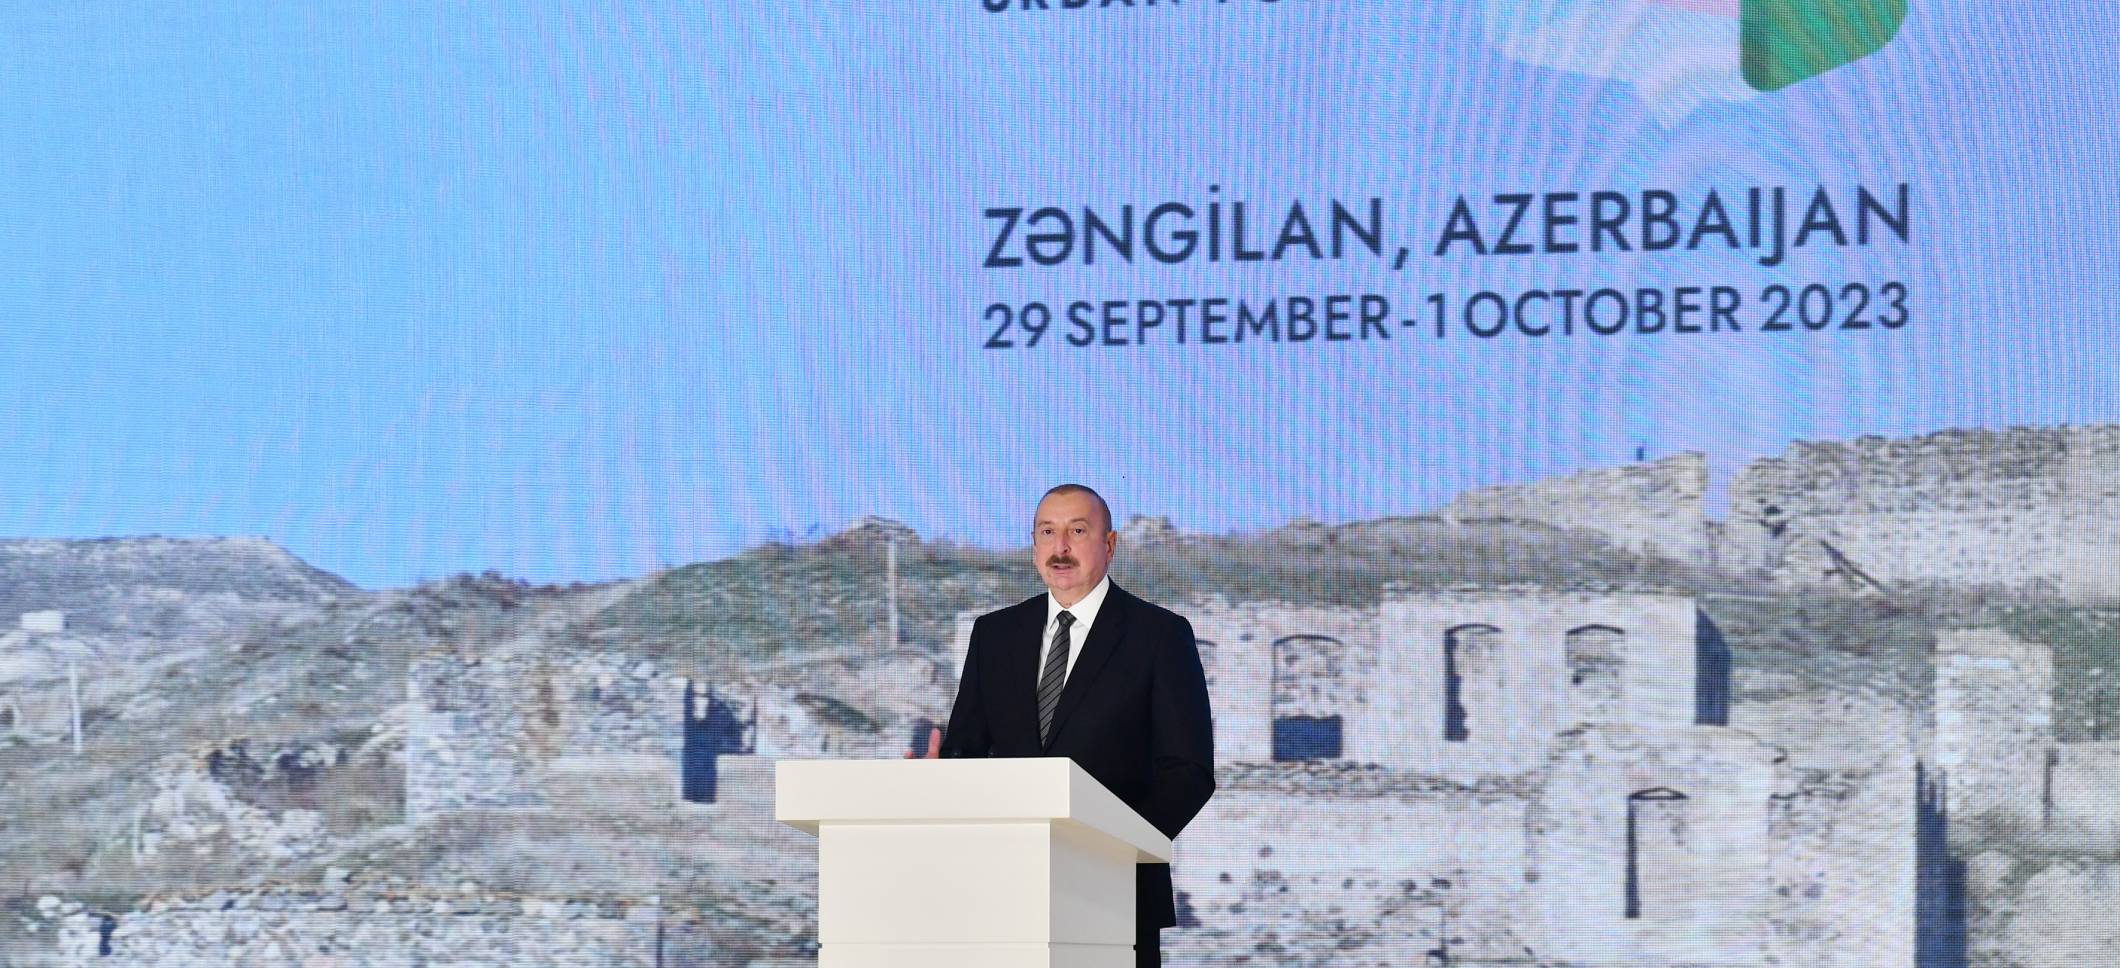 Ilham Aliyev participated in 2nd Azerbaijan National Urban Forum in Zangilan